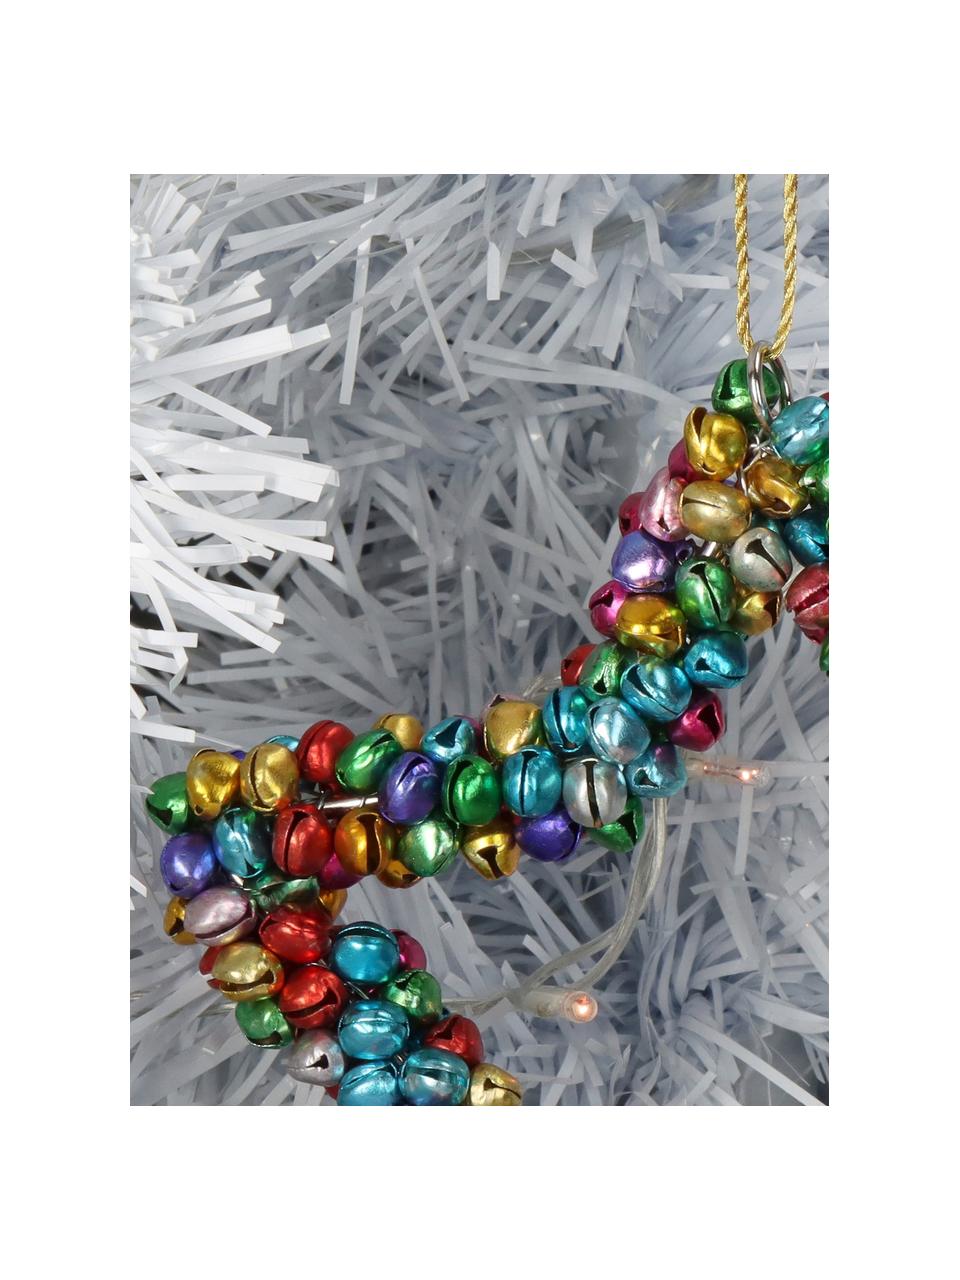 Ozdoba na vánoční stromeček s rolničkami Star, Potažený kov, Více barev, Š 14 cm, V 14 cm